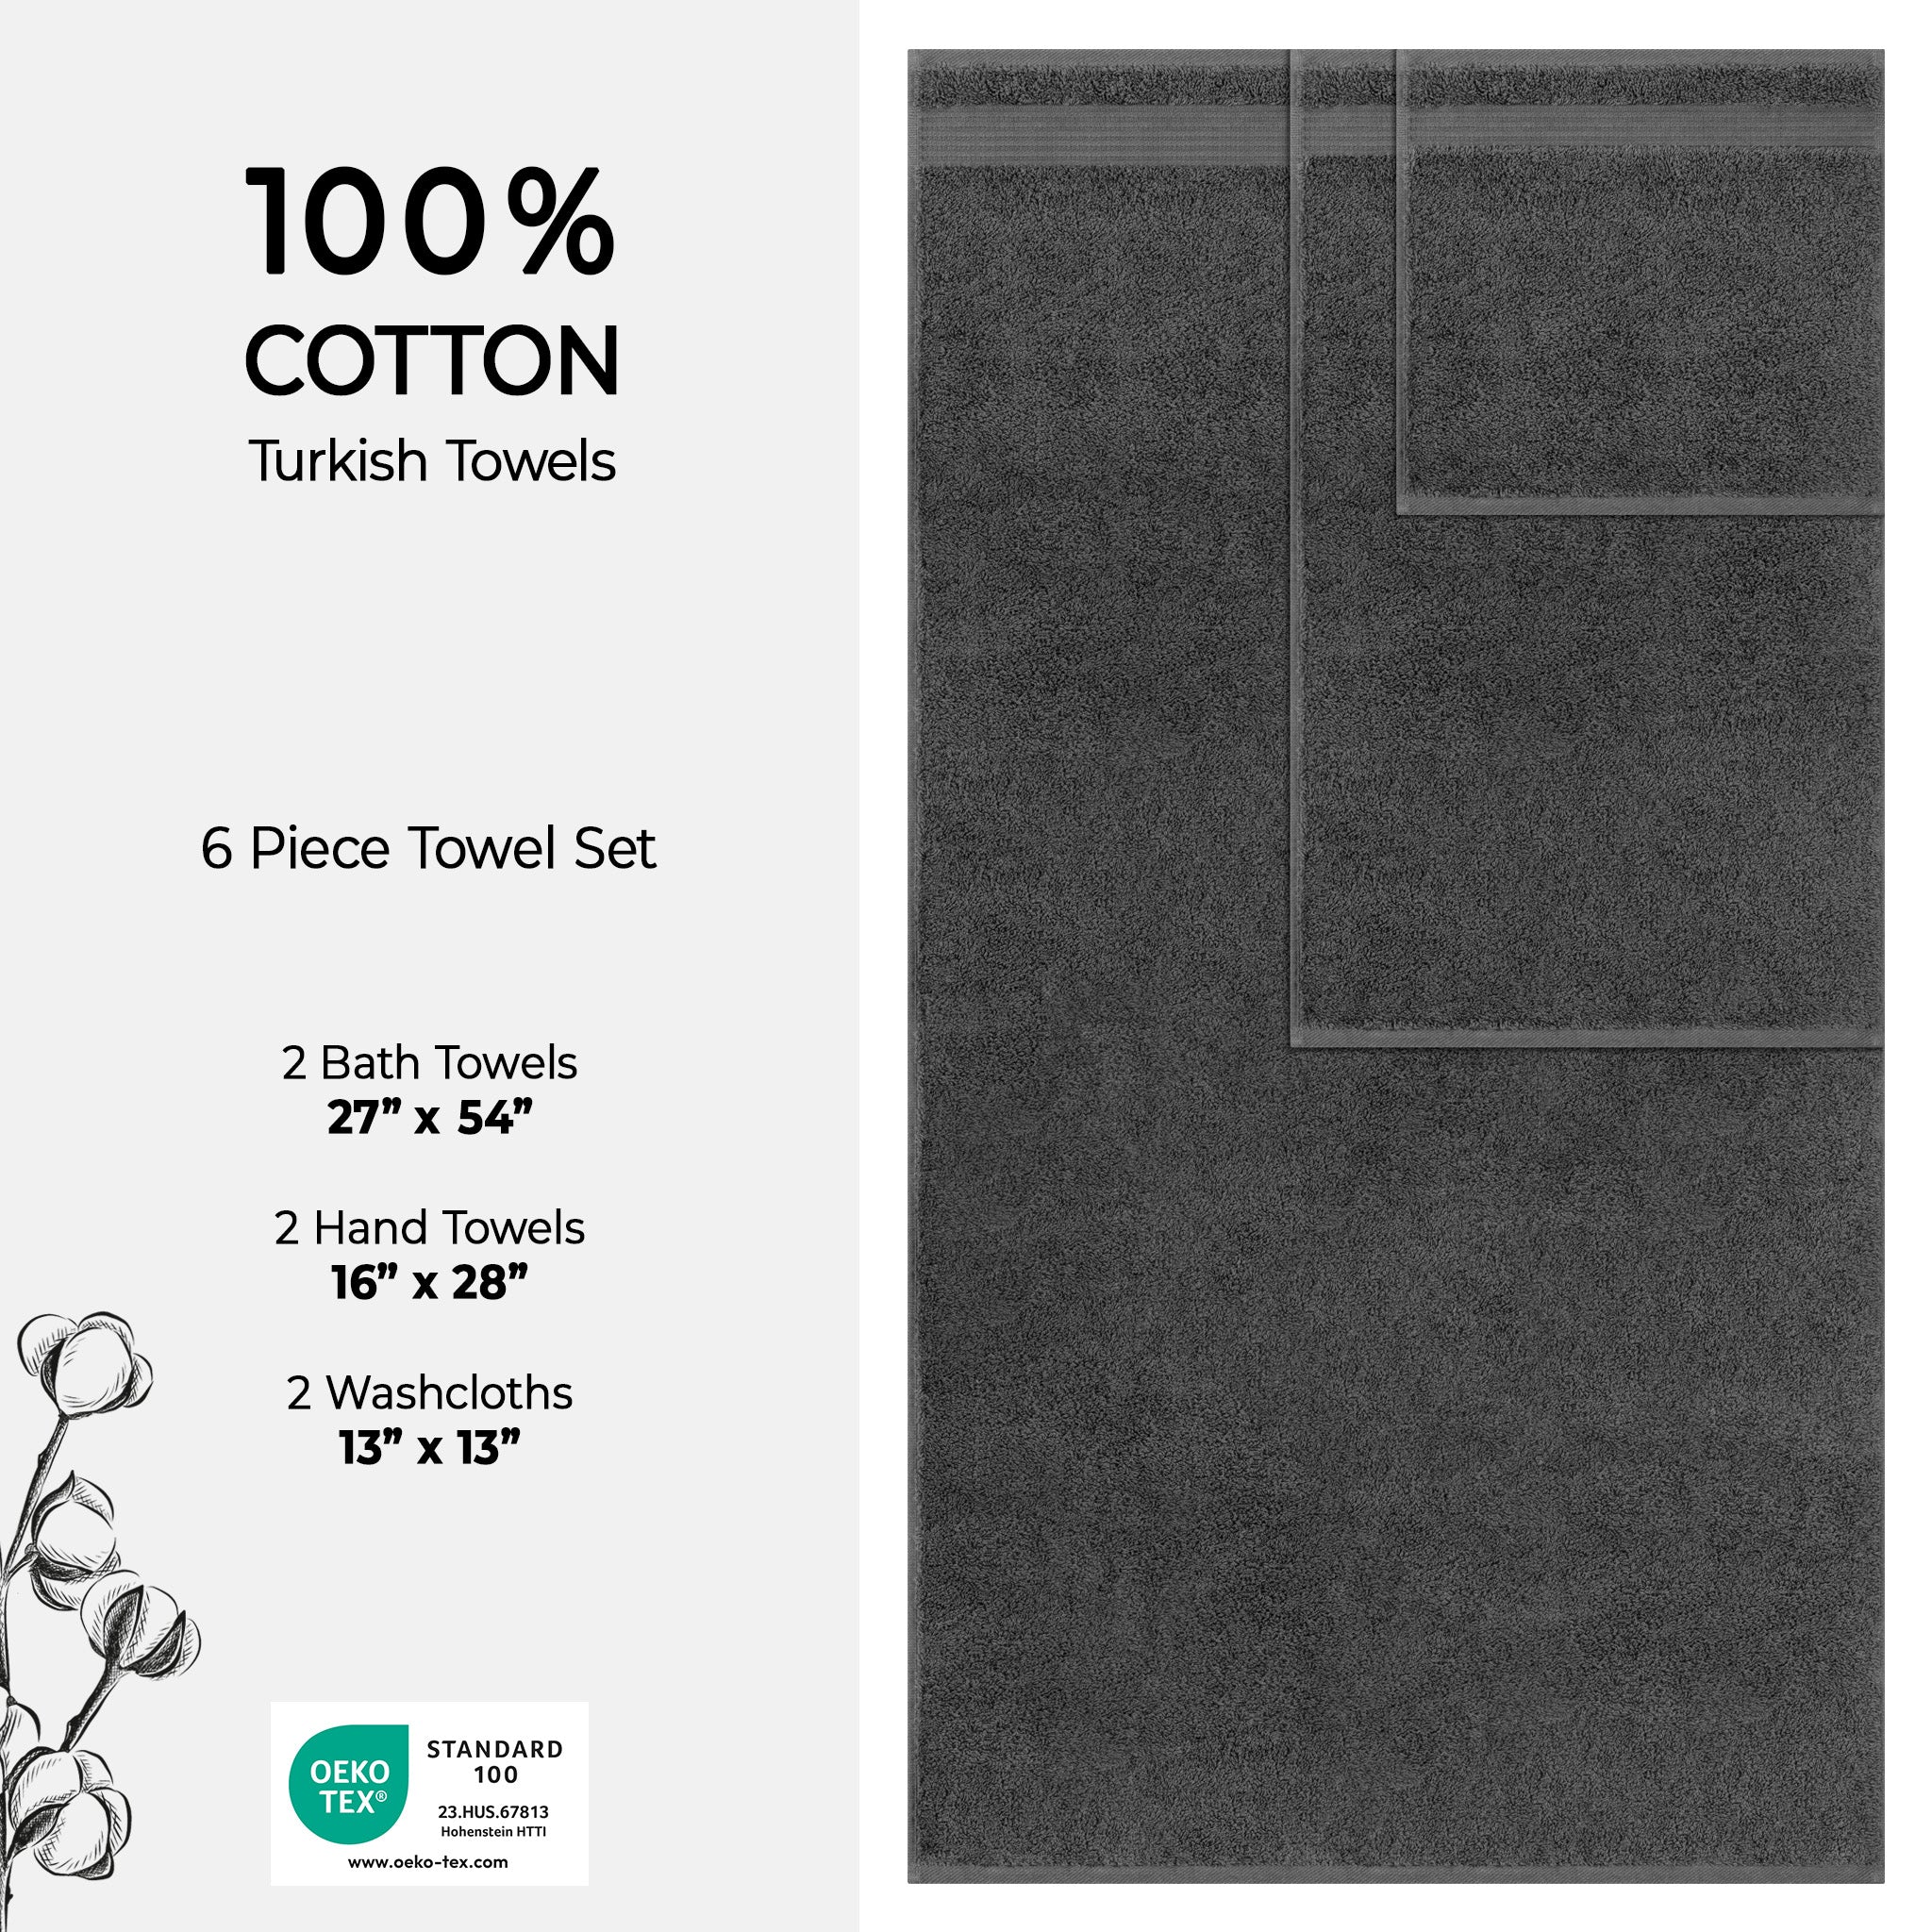 American Soft Linen Bekos 100% Cotton Turkish Towels 6 Piece Bath Towel Set -gray-04